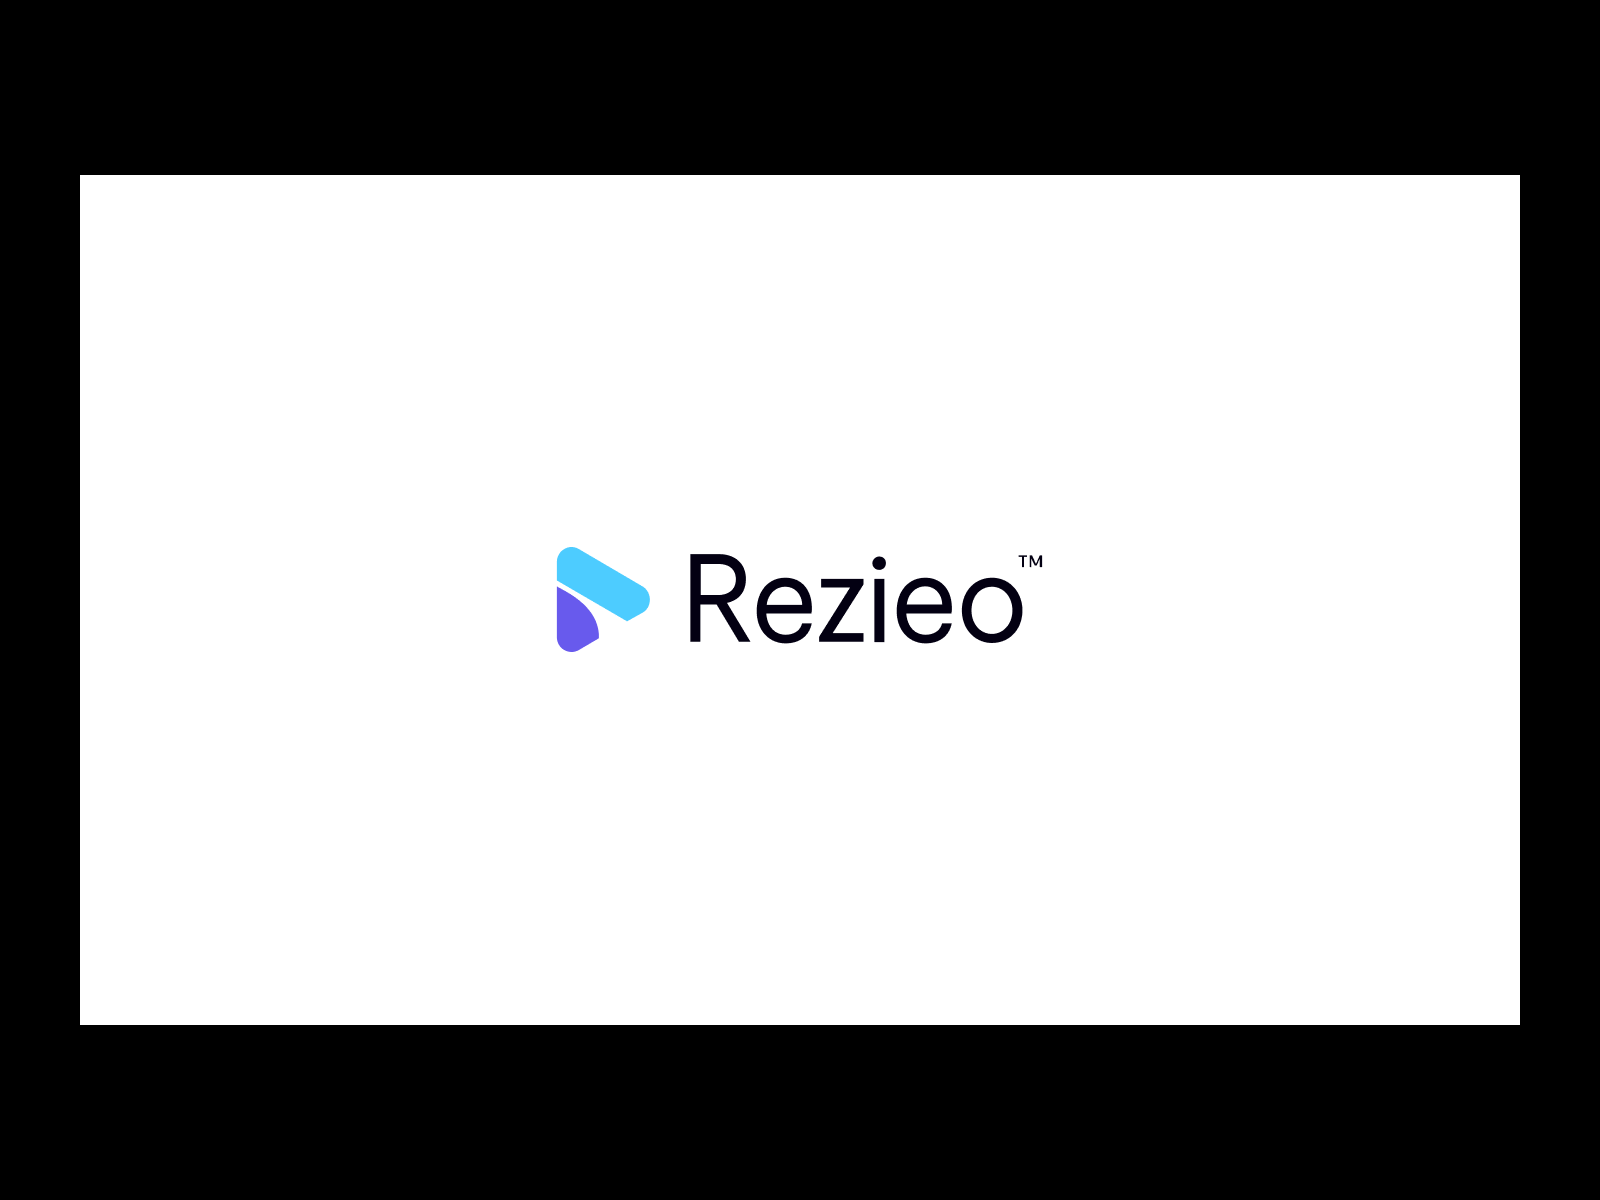 Rezieo™ - Web App for On-Demand Video Interviews